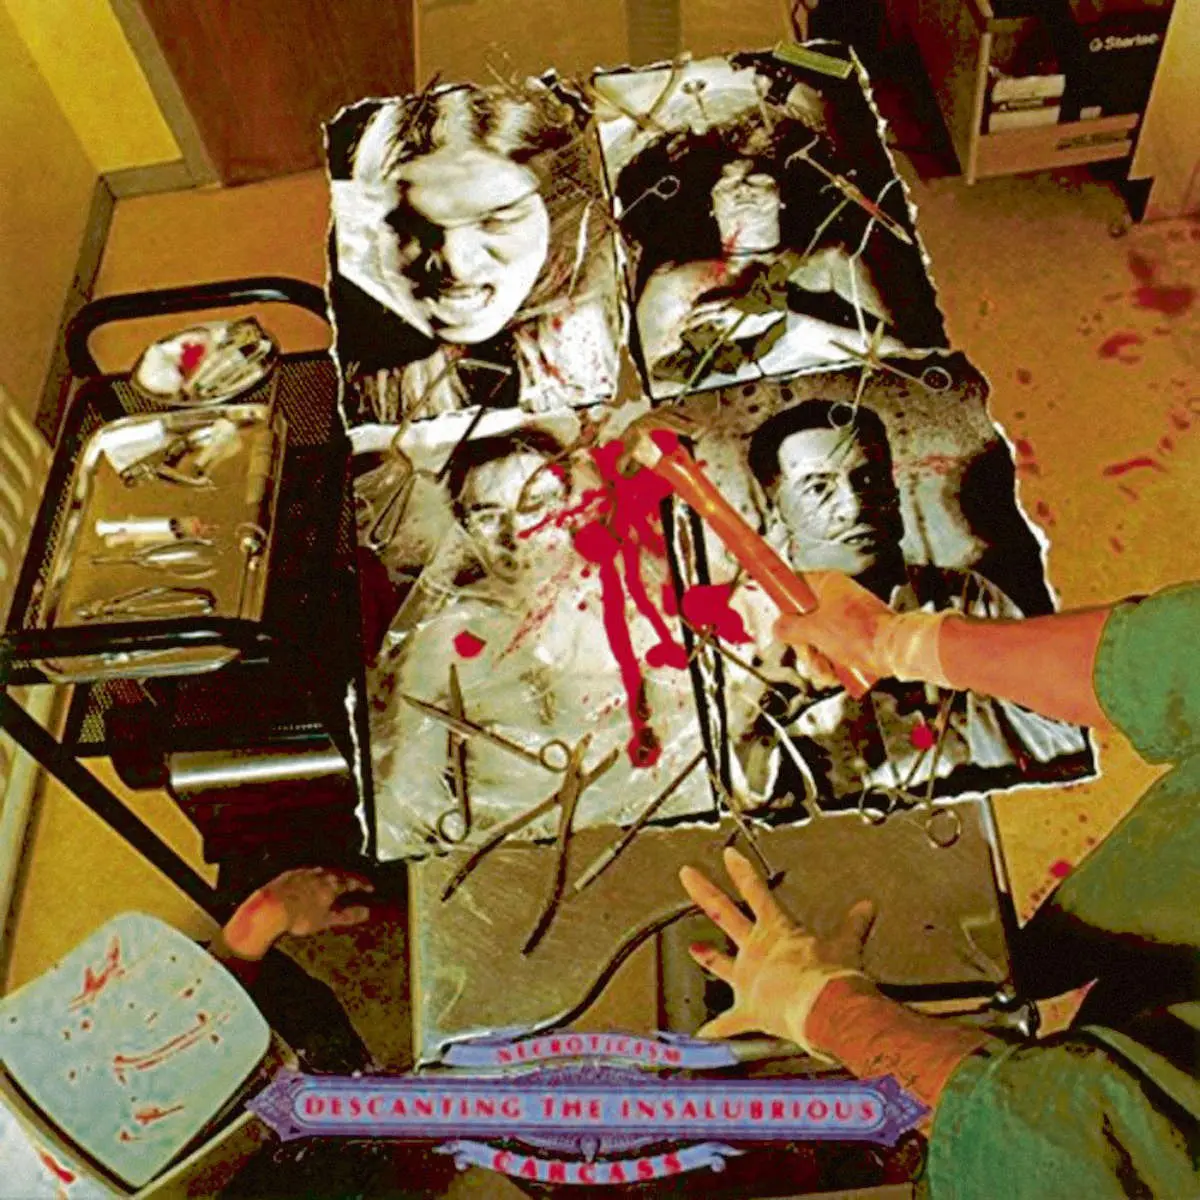 Carcass – Necroticism – Descanting The Insalubrious (1991)